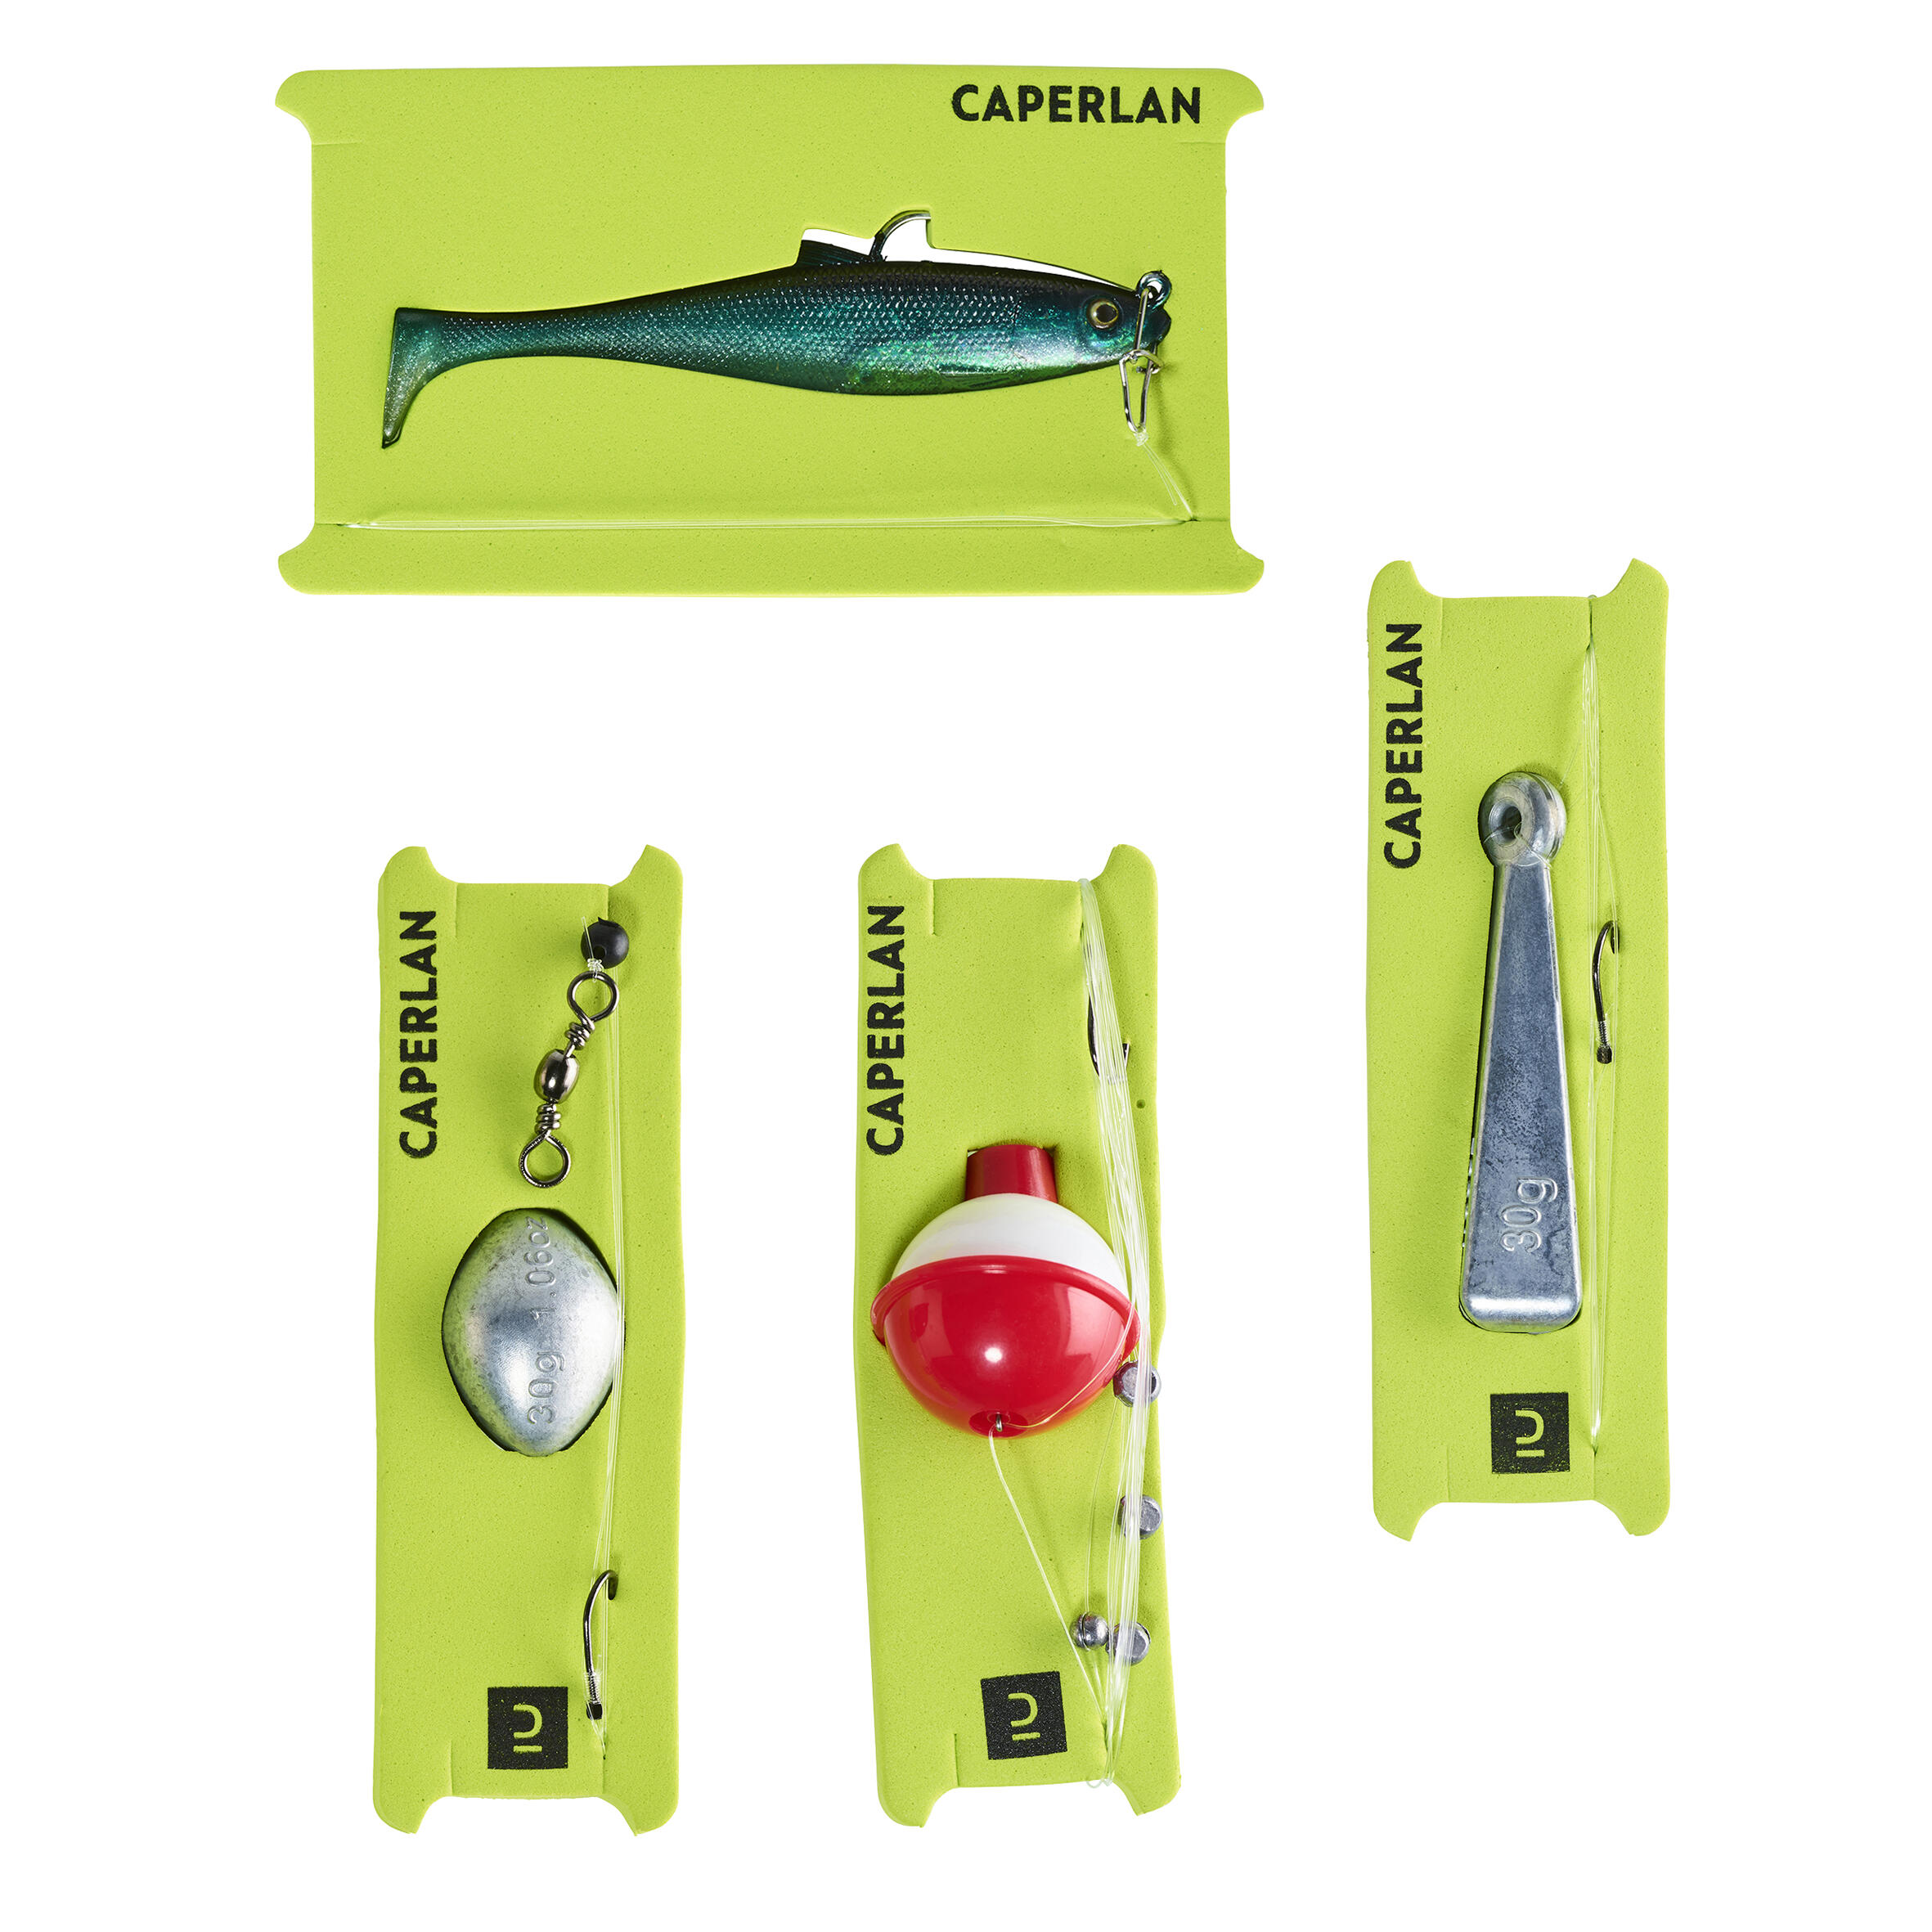 350 sea fishing starter kit - Caperlan - Decathlon